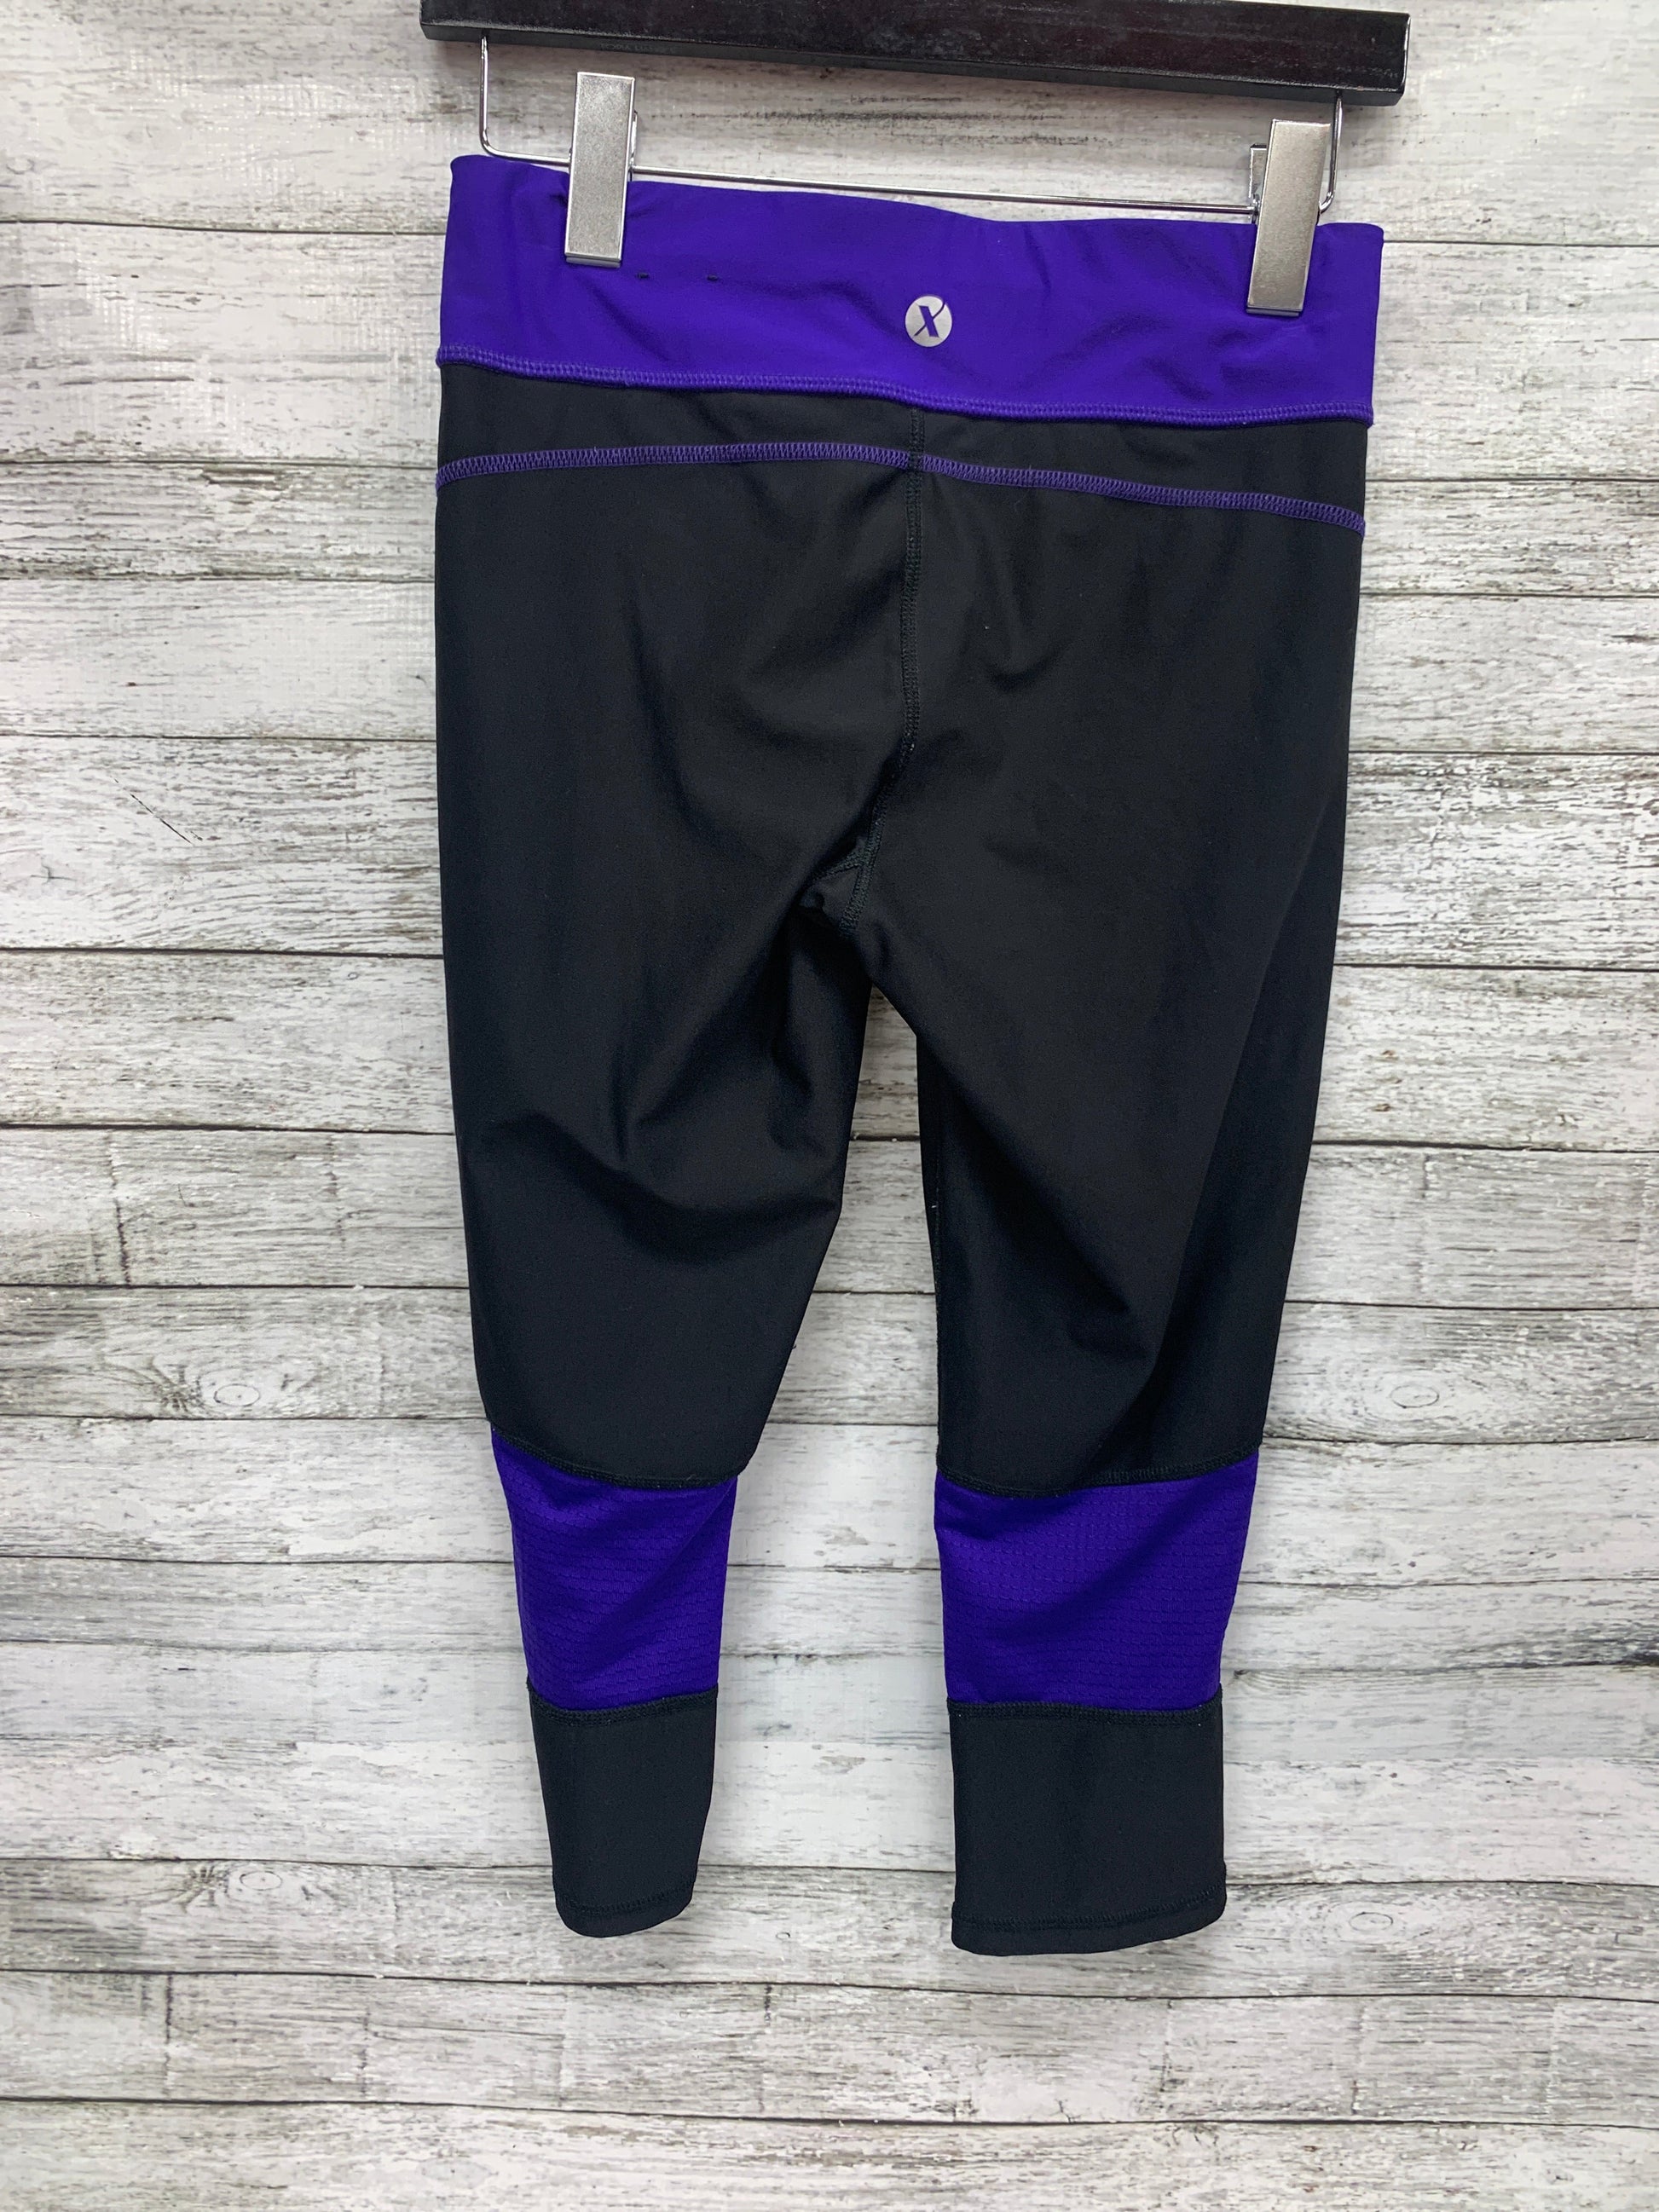 Xersion Medium Capri Workout Pants